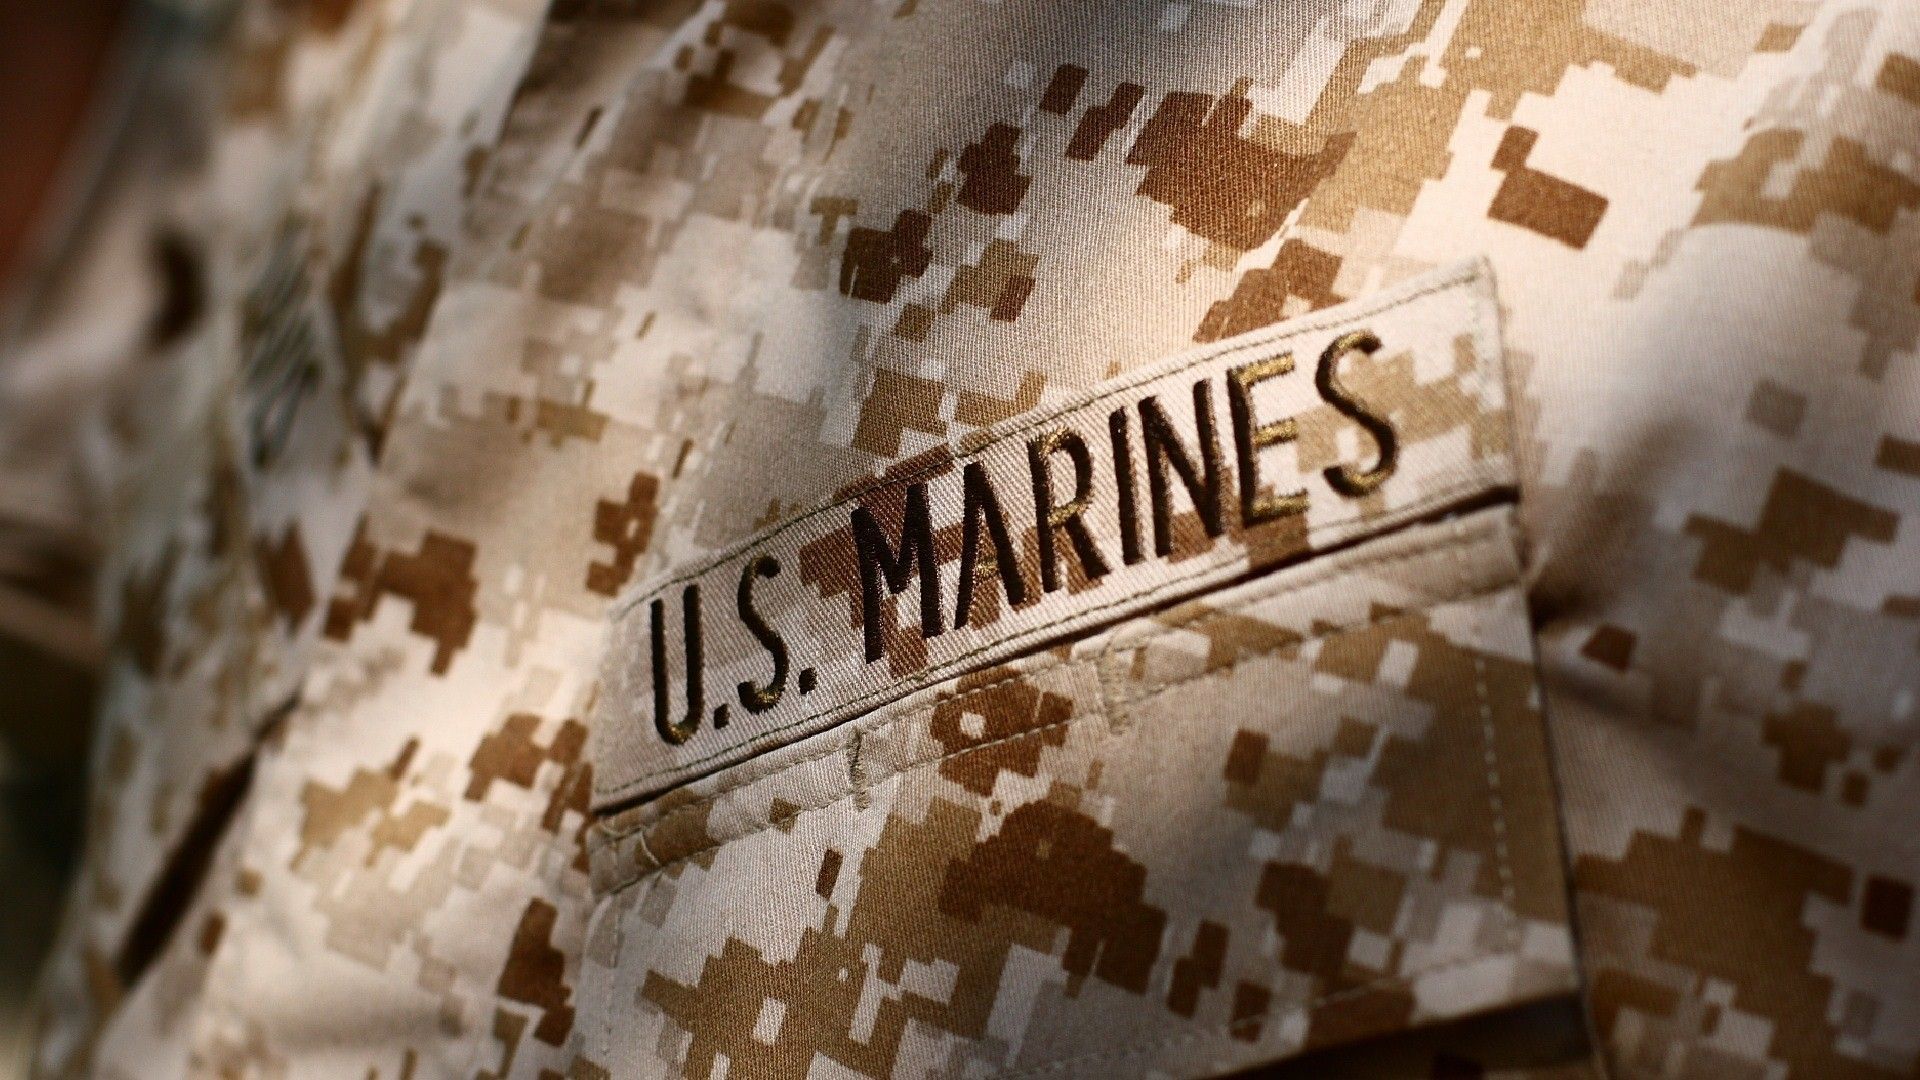 Usmc iPhone Wallpaper. Marines, Marine, Usmc